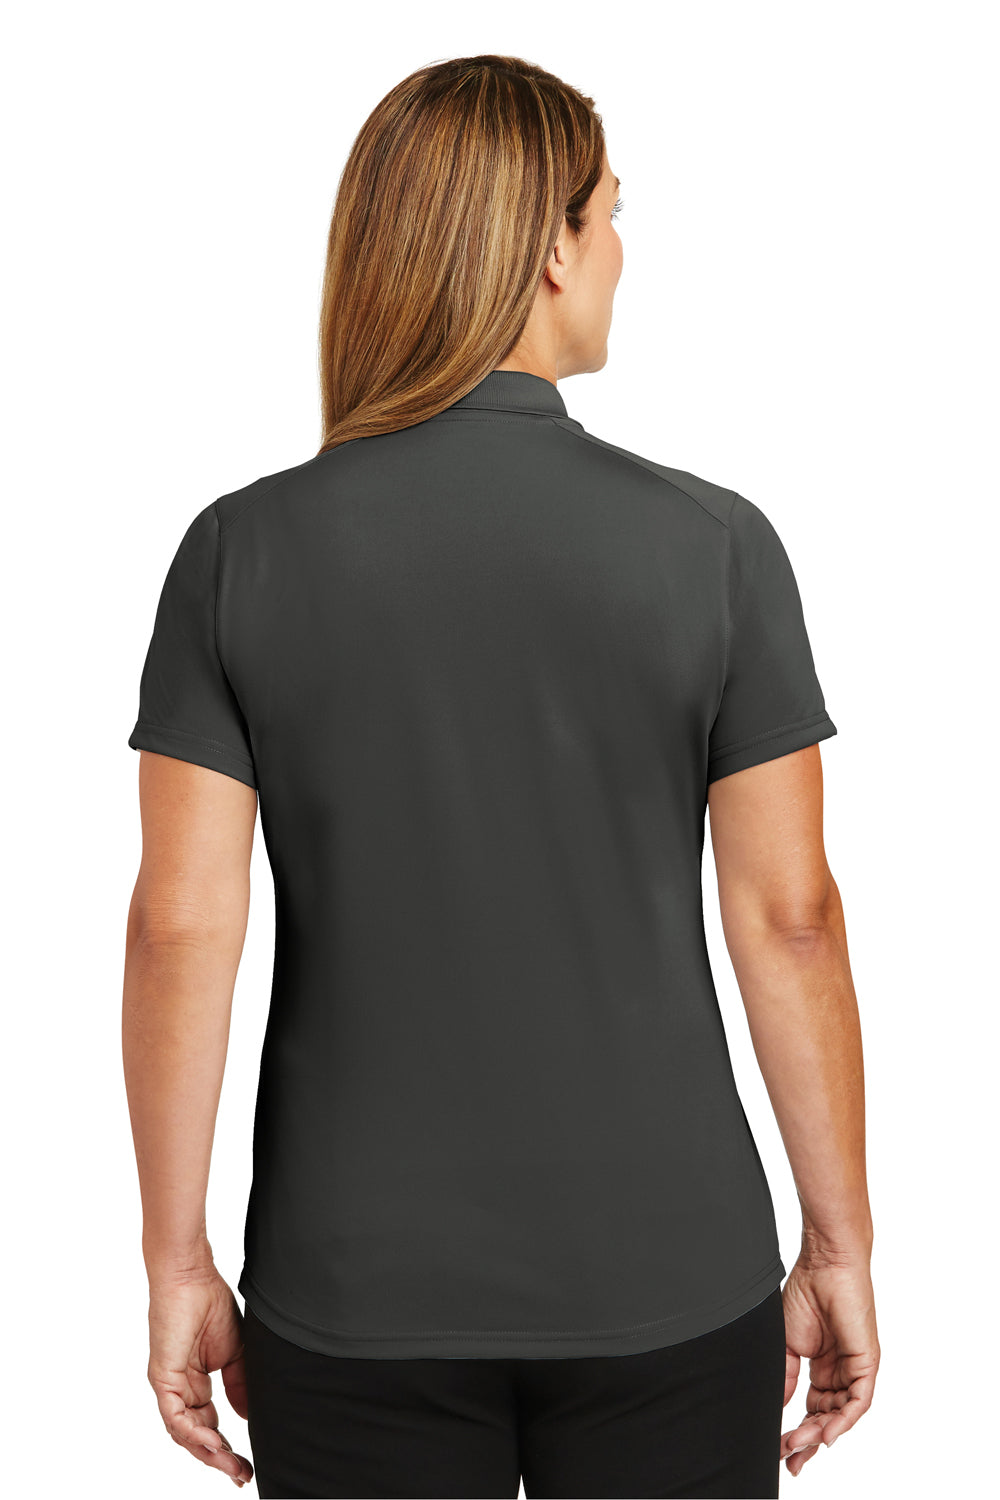 CornerStone CS419 Womens Select Moisture Wicking Short Sleeve Polo Shirt Charcoal Grey Back